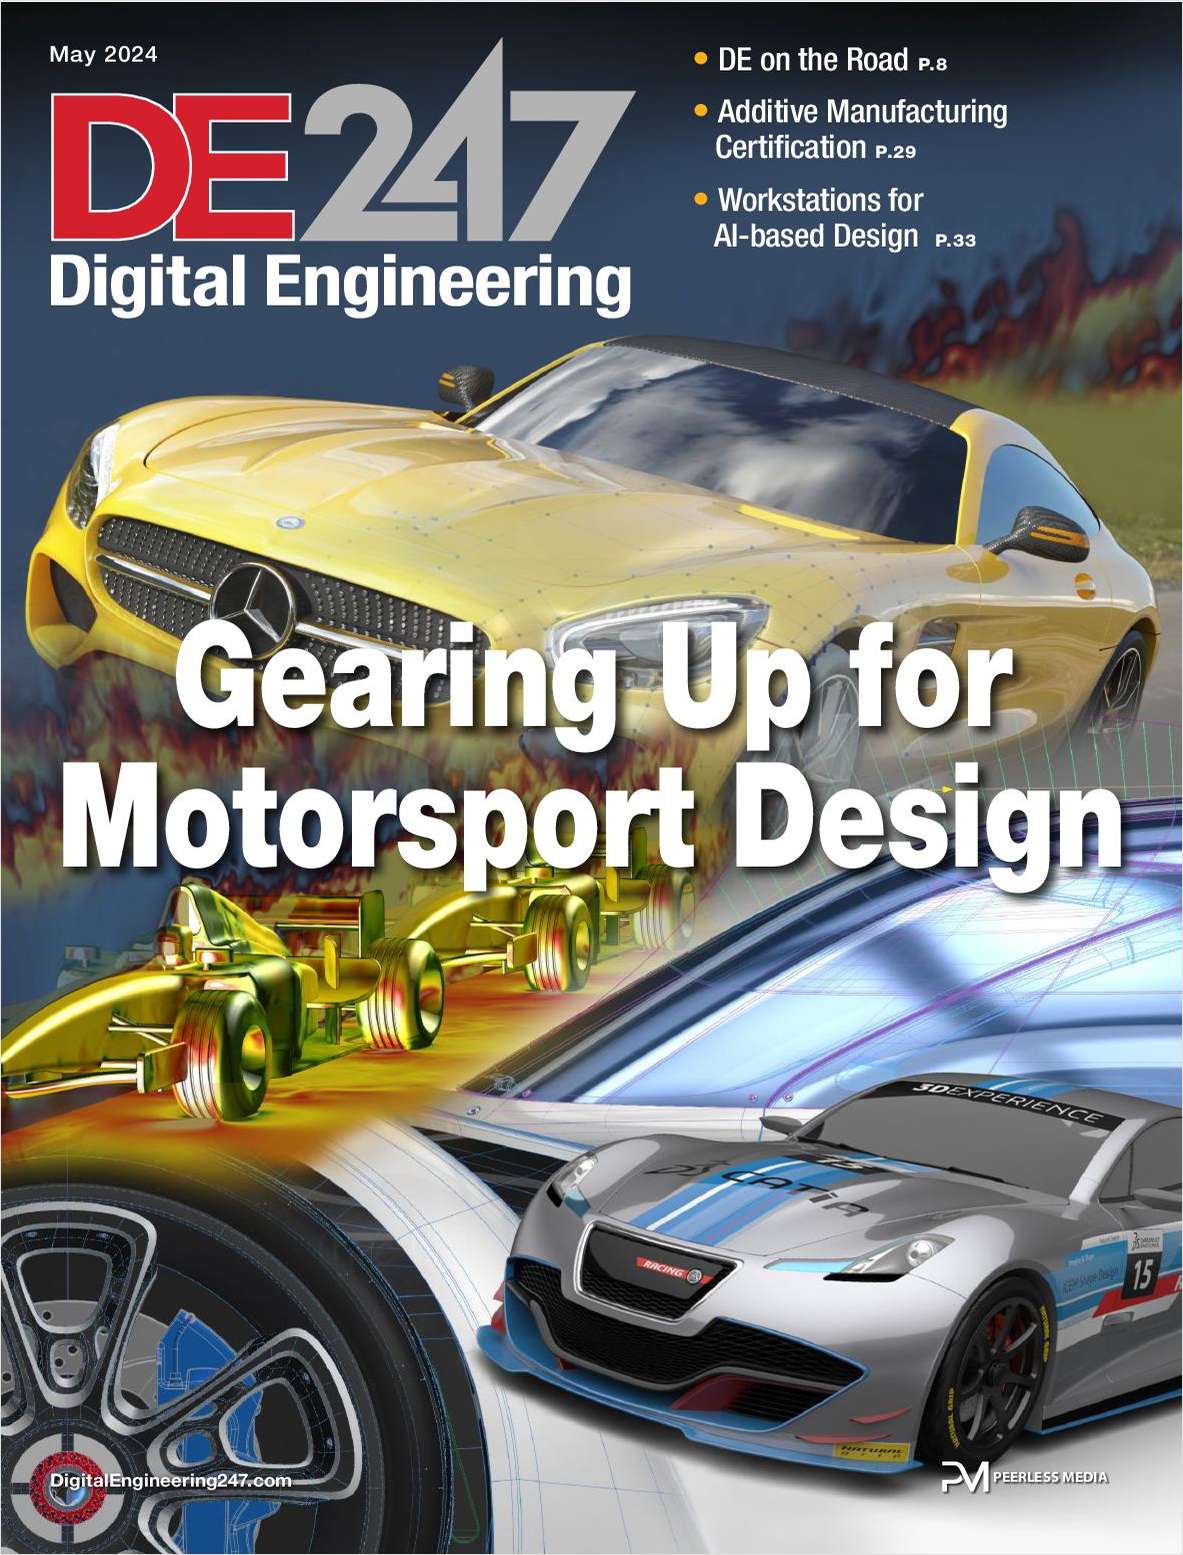 Digital Engineering: Gearing Up for Motorsport Design